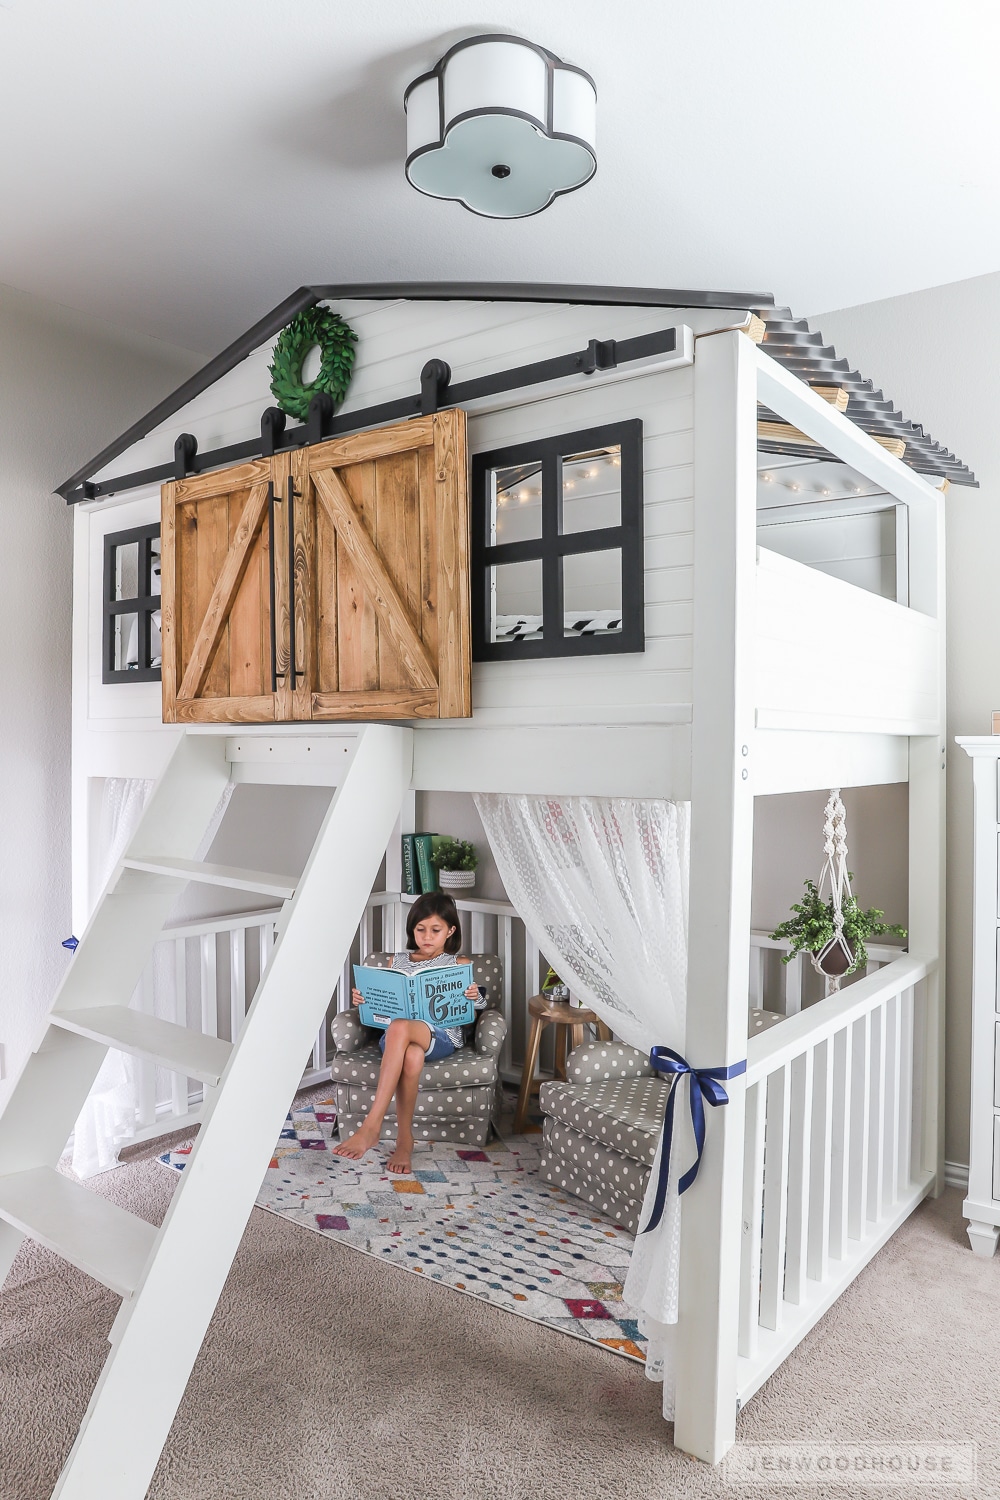 How to build a DIY sliding barn door loft bed - full tutorial by Jen Woodhouse